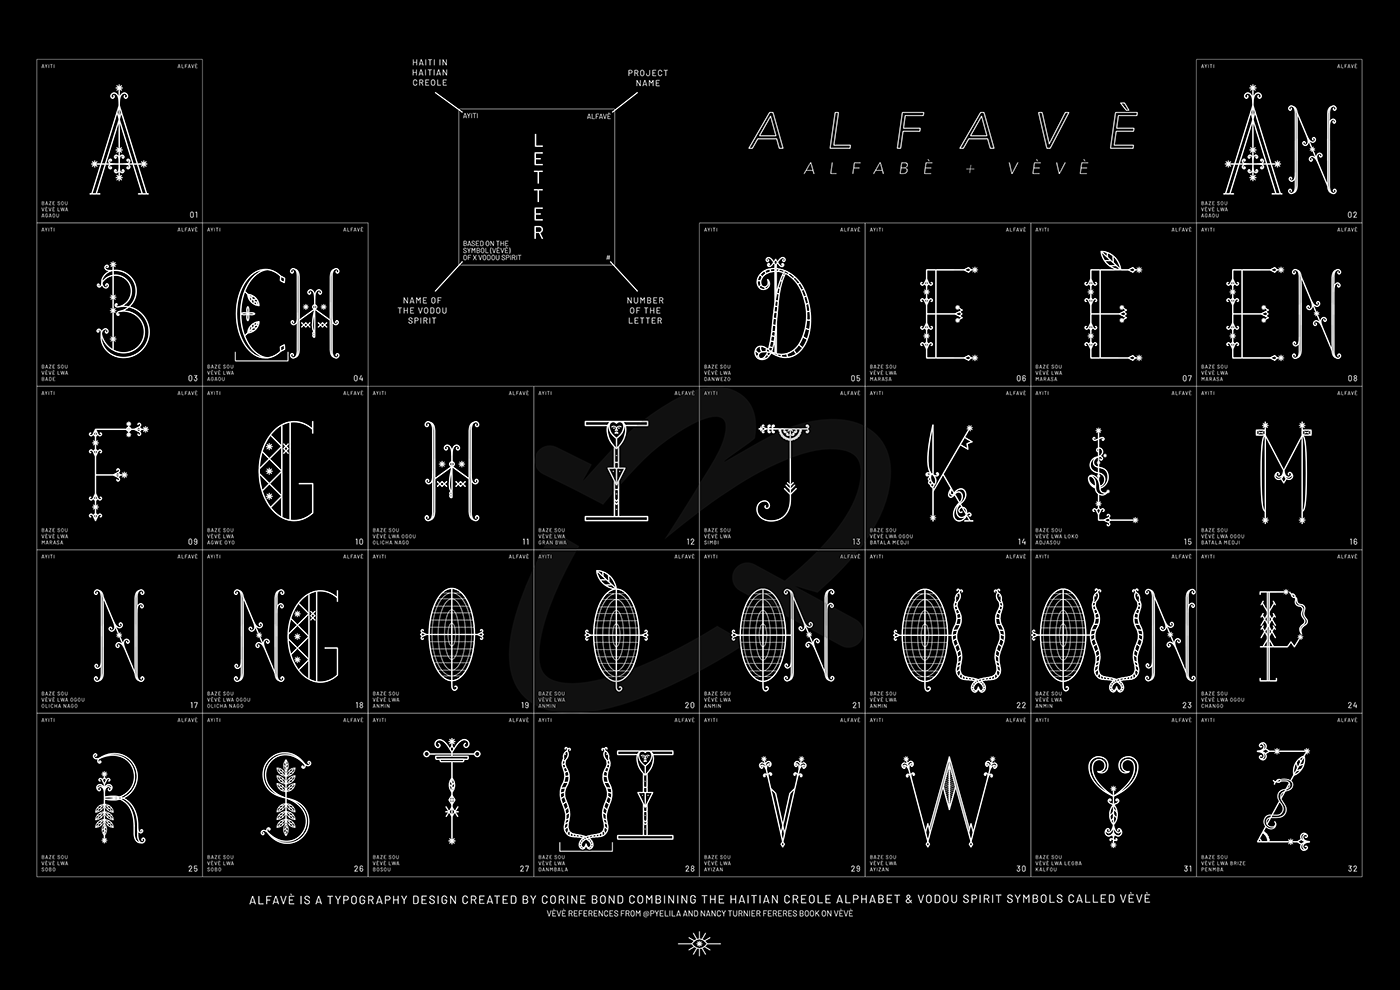 Alfavè Ayiti decorative type font Haiti veve voodoo Veve Alphabeth alfavèvè ADCAWARD